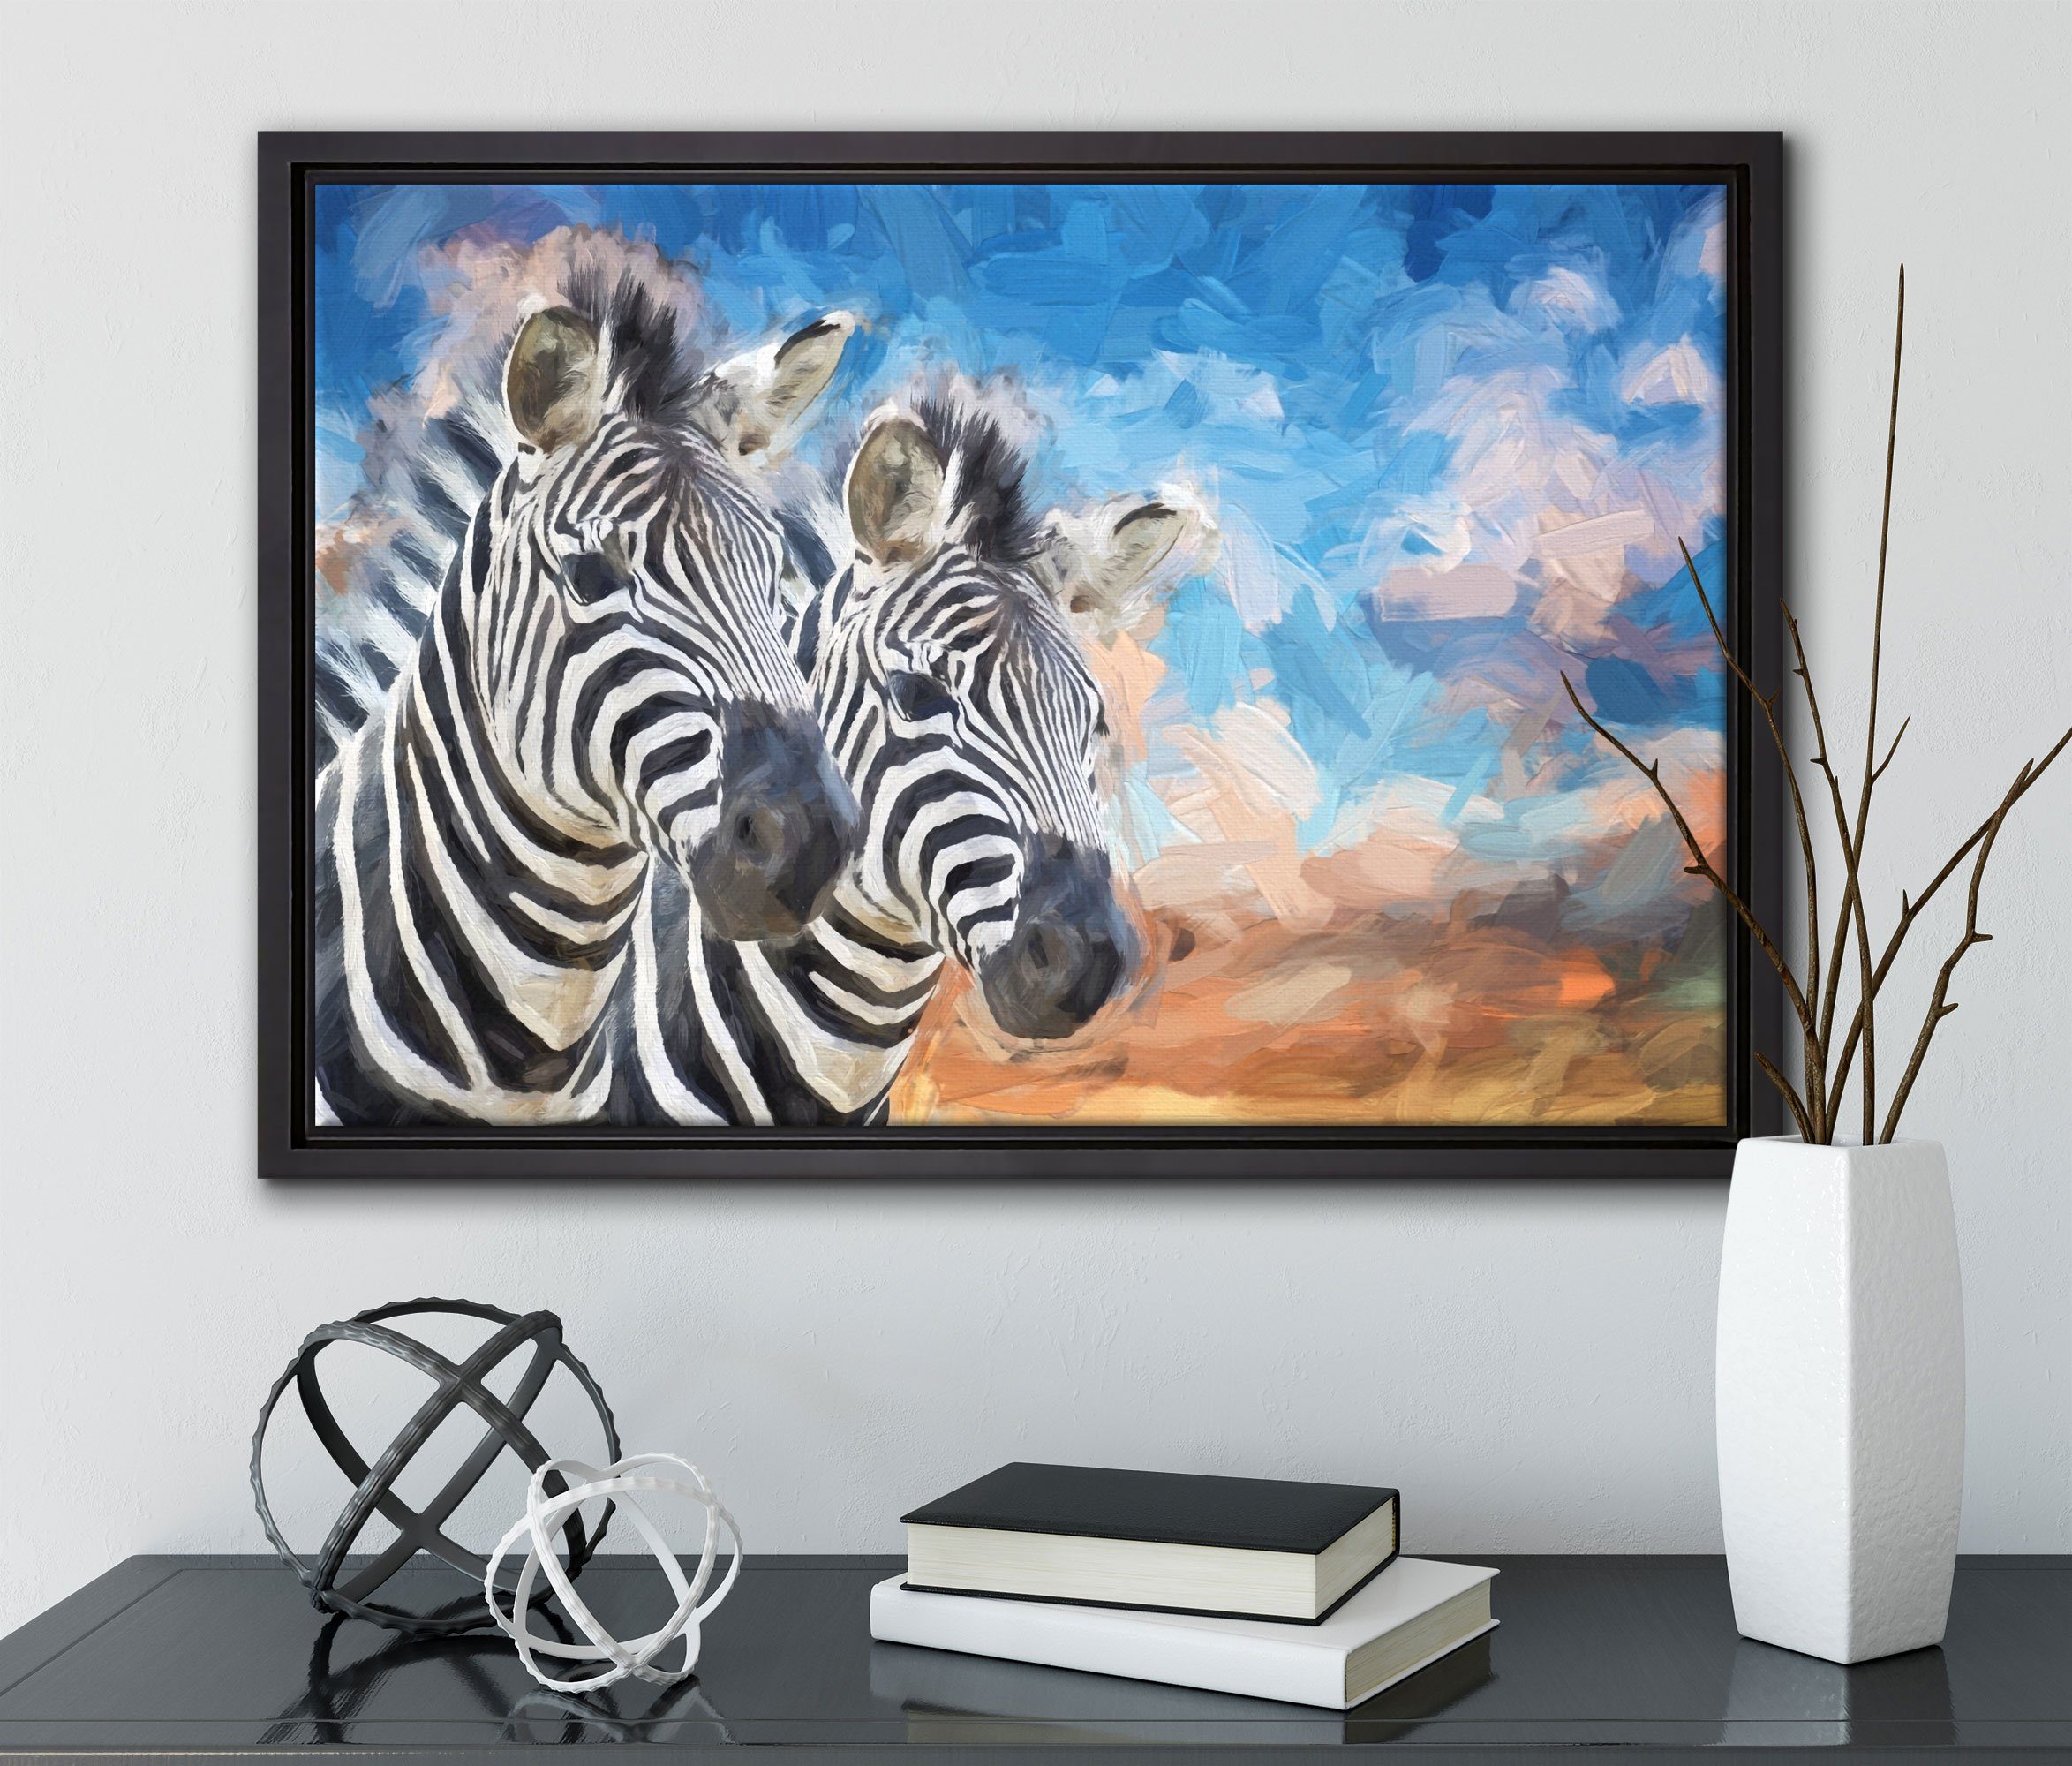 Pixxprint Leinwandbild St), einem Zebrapaar, Wanddekoration Zackenaufhänger gefasst, in (1 bespannt, Leinwandbild fertig Schattenfugen-Bilderrahmen schönes inkl.